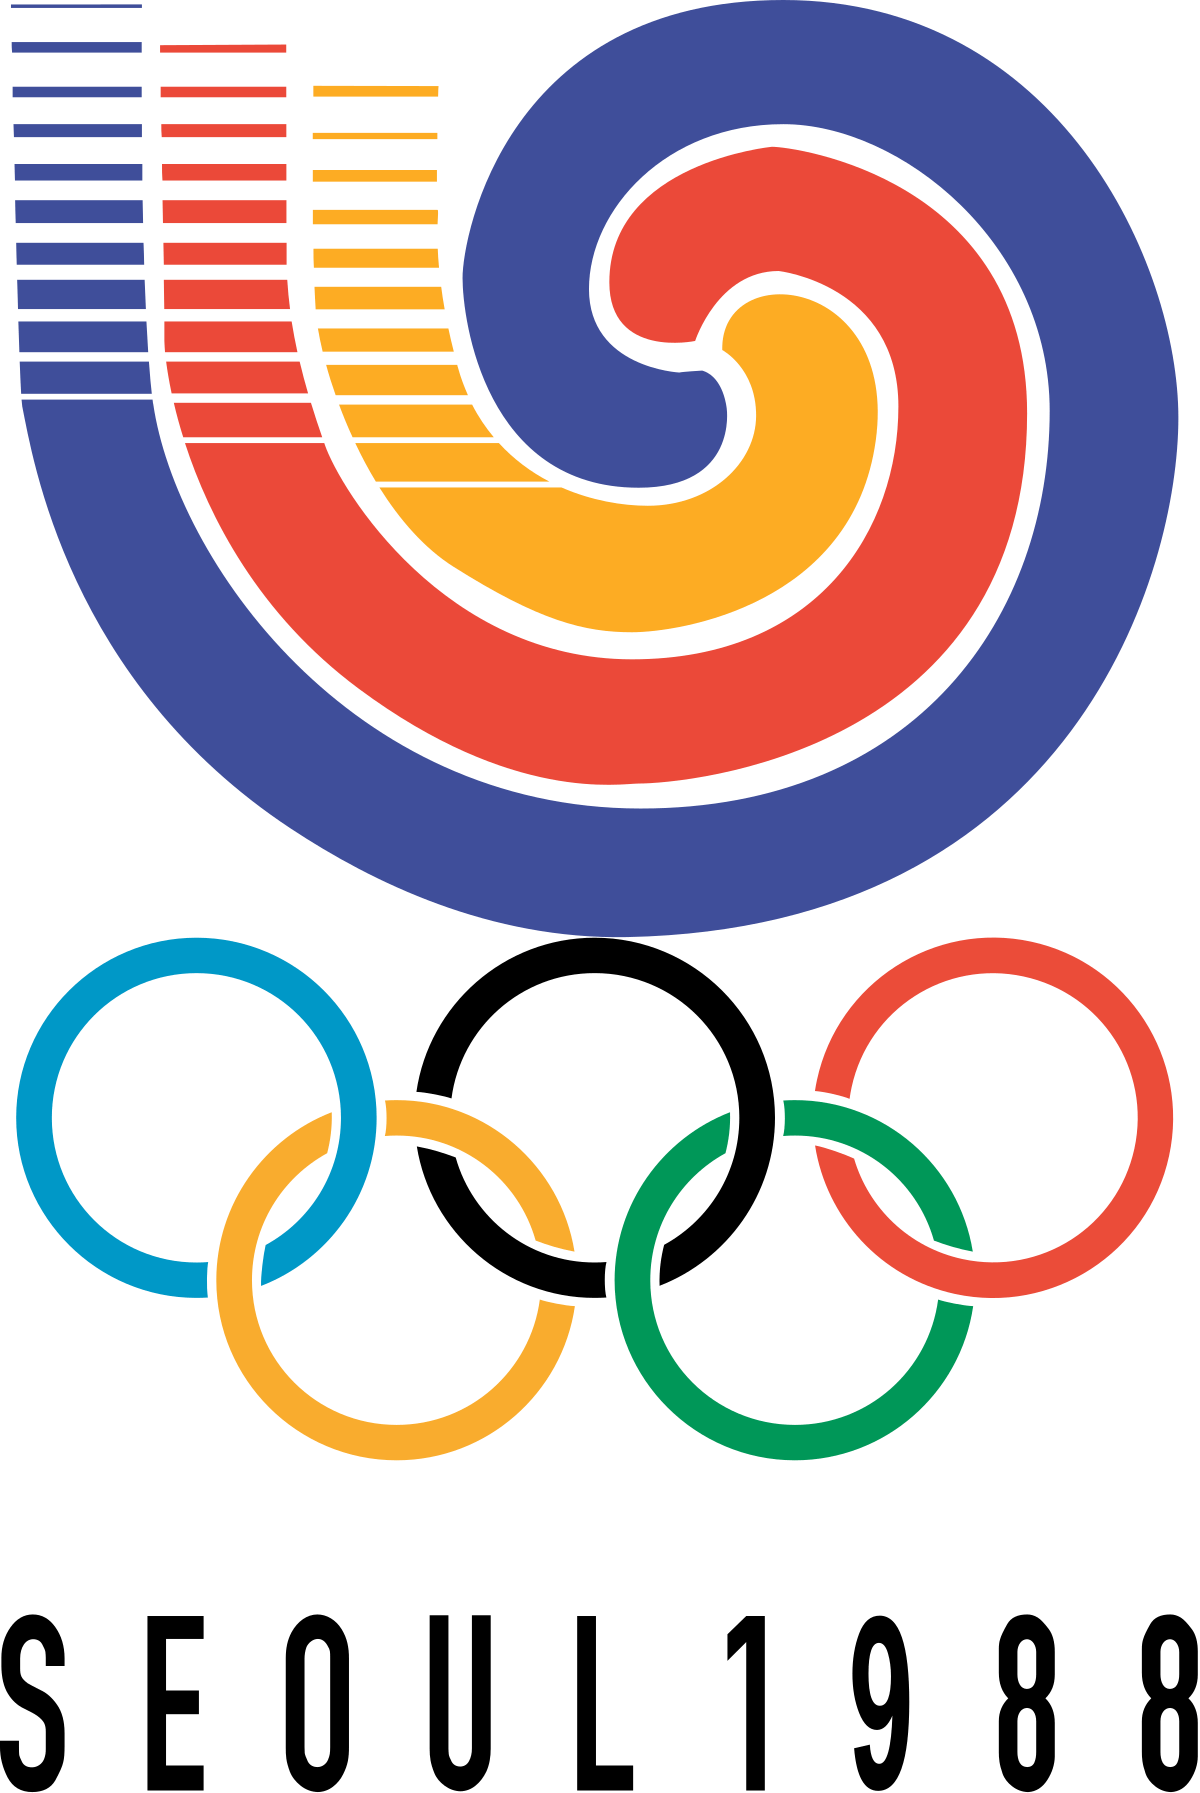 88 Logo - 1988 Summer Olympics